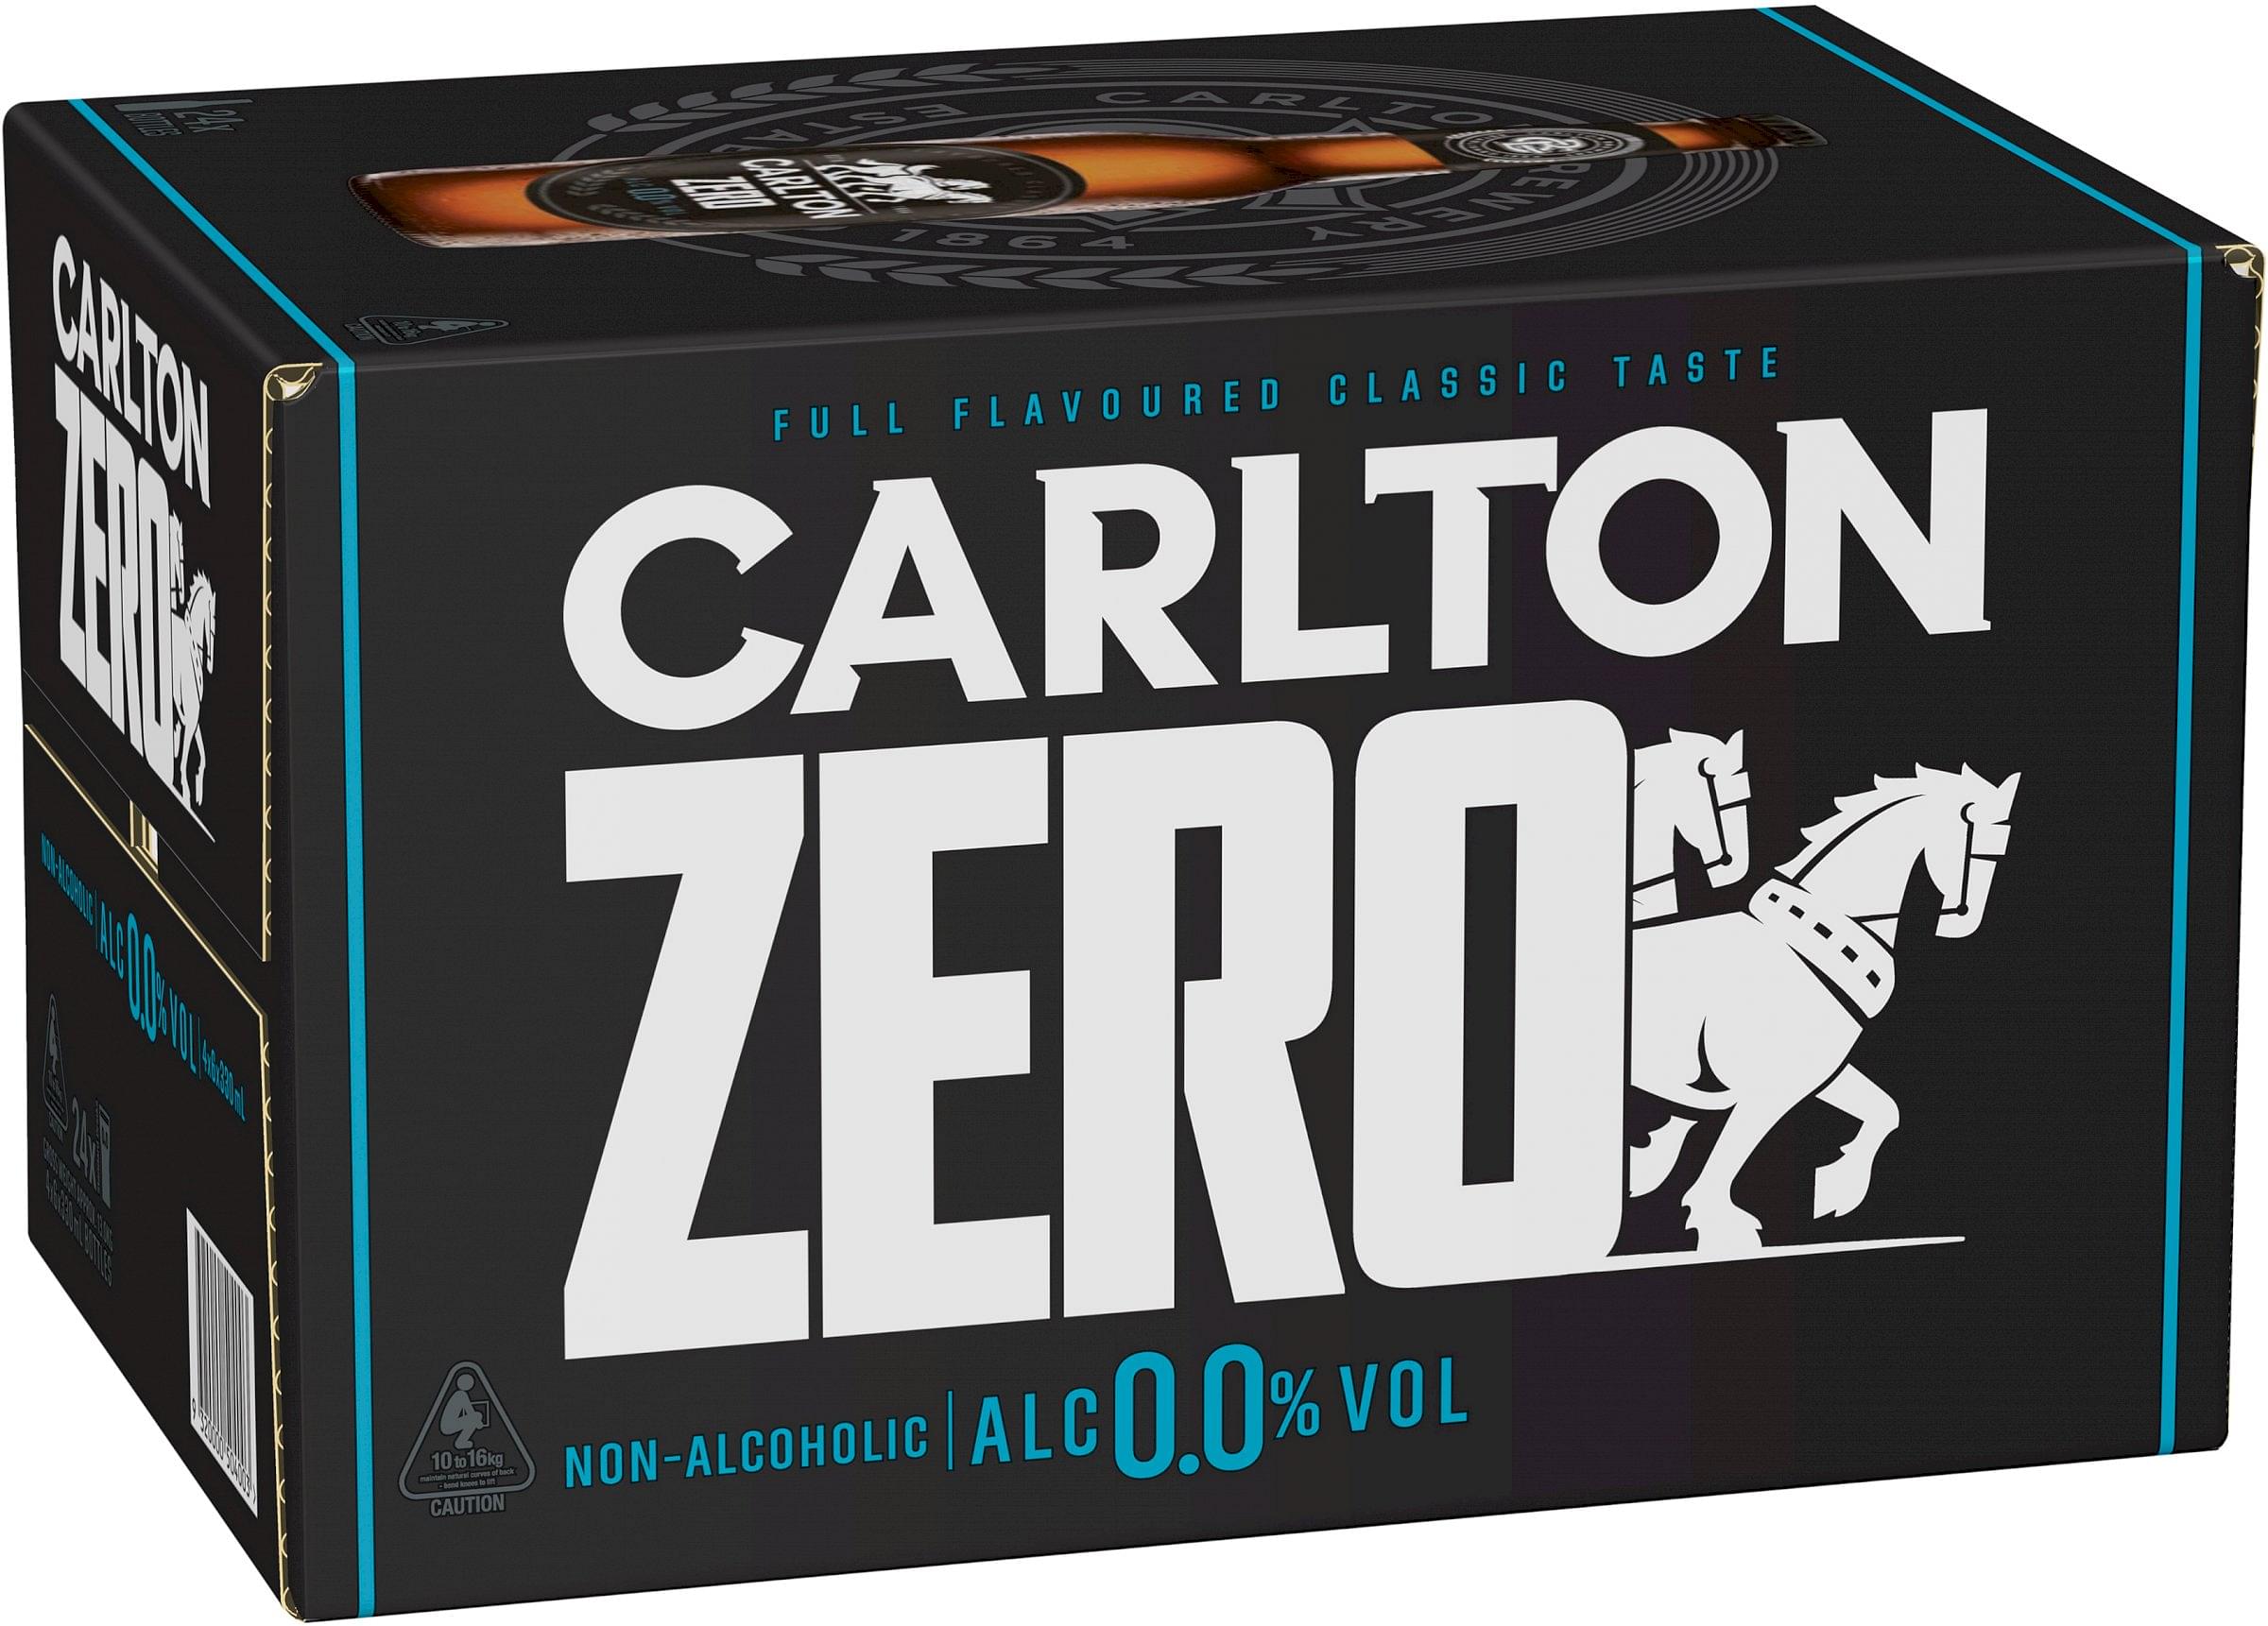 Carlton Zero Bottle